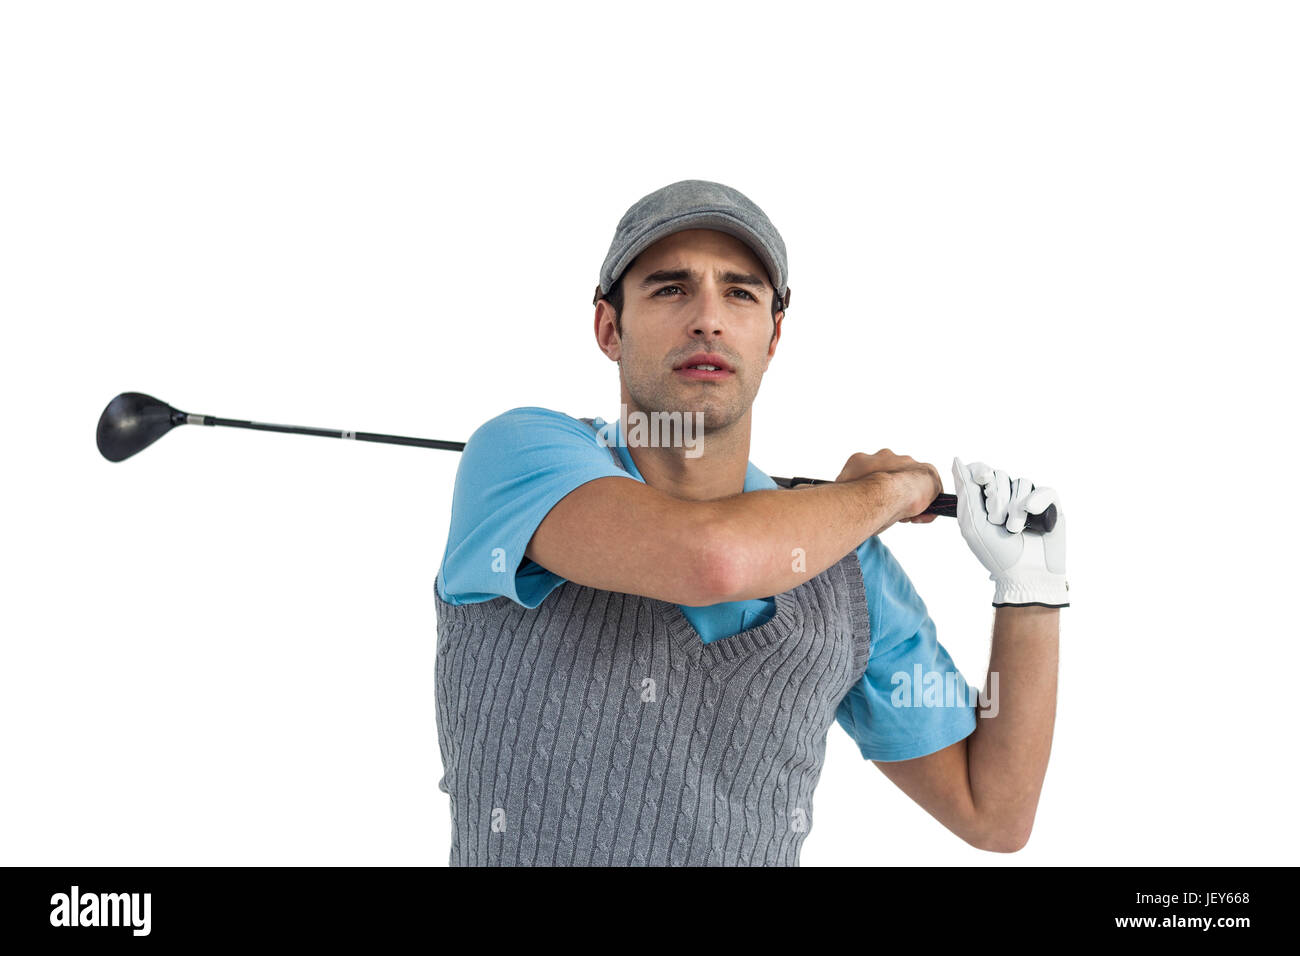 Golf player taking a shot Stock Photo